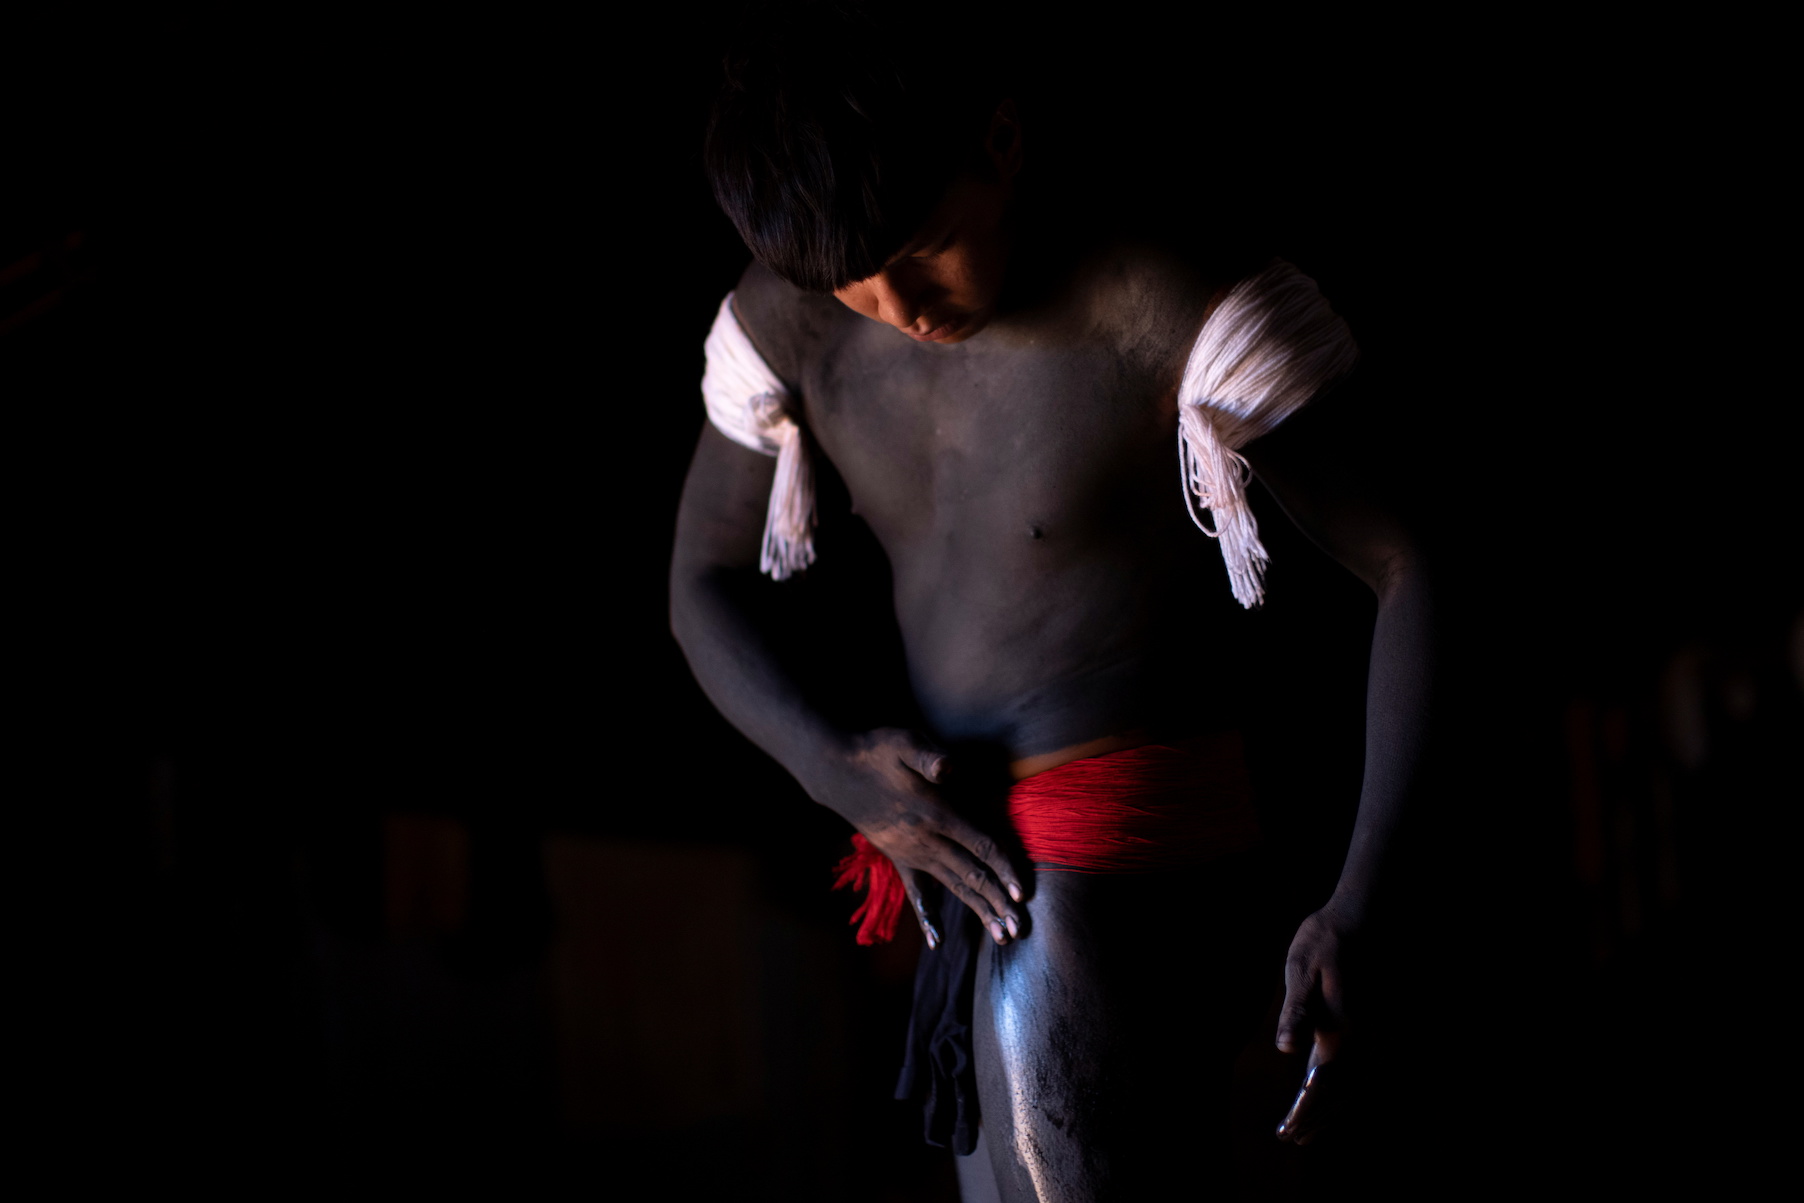 Photographer Gets Rare Glimpse Into Rituals Of Amazon S Yawalapiti Cgtn